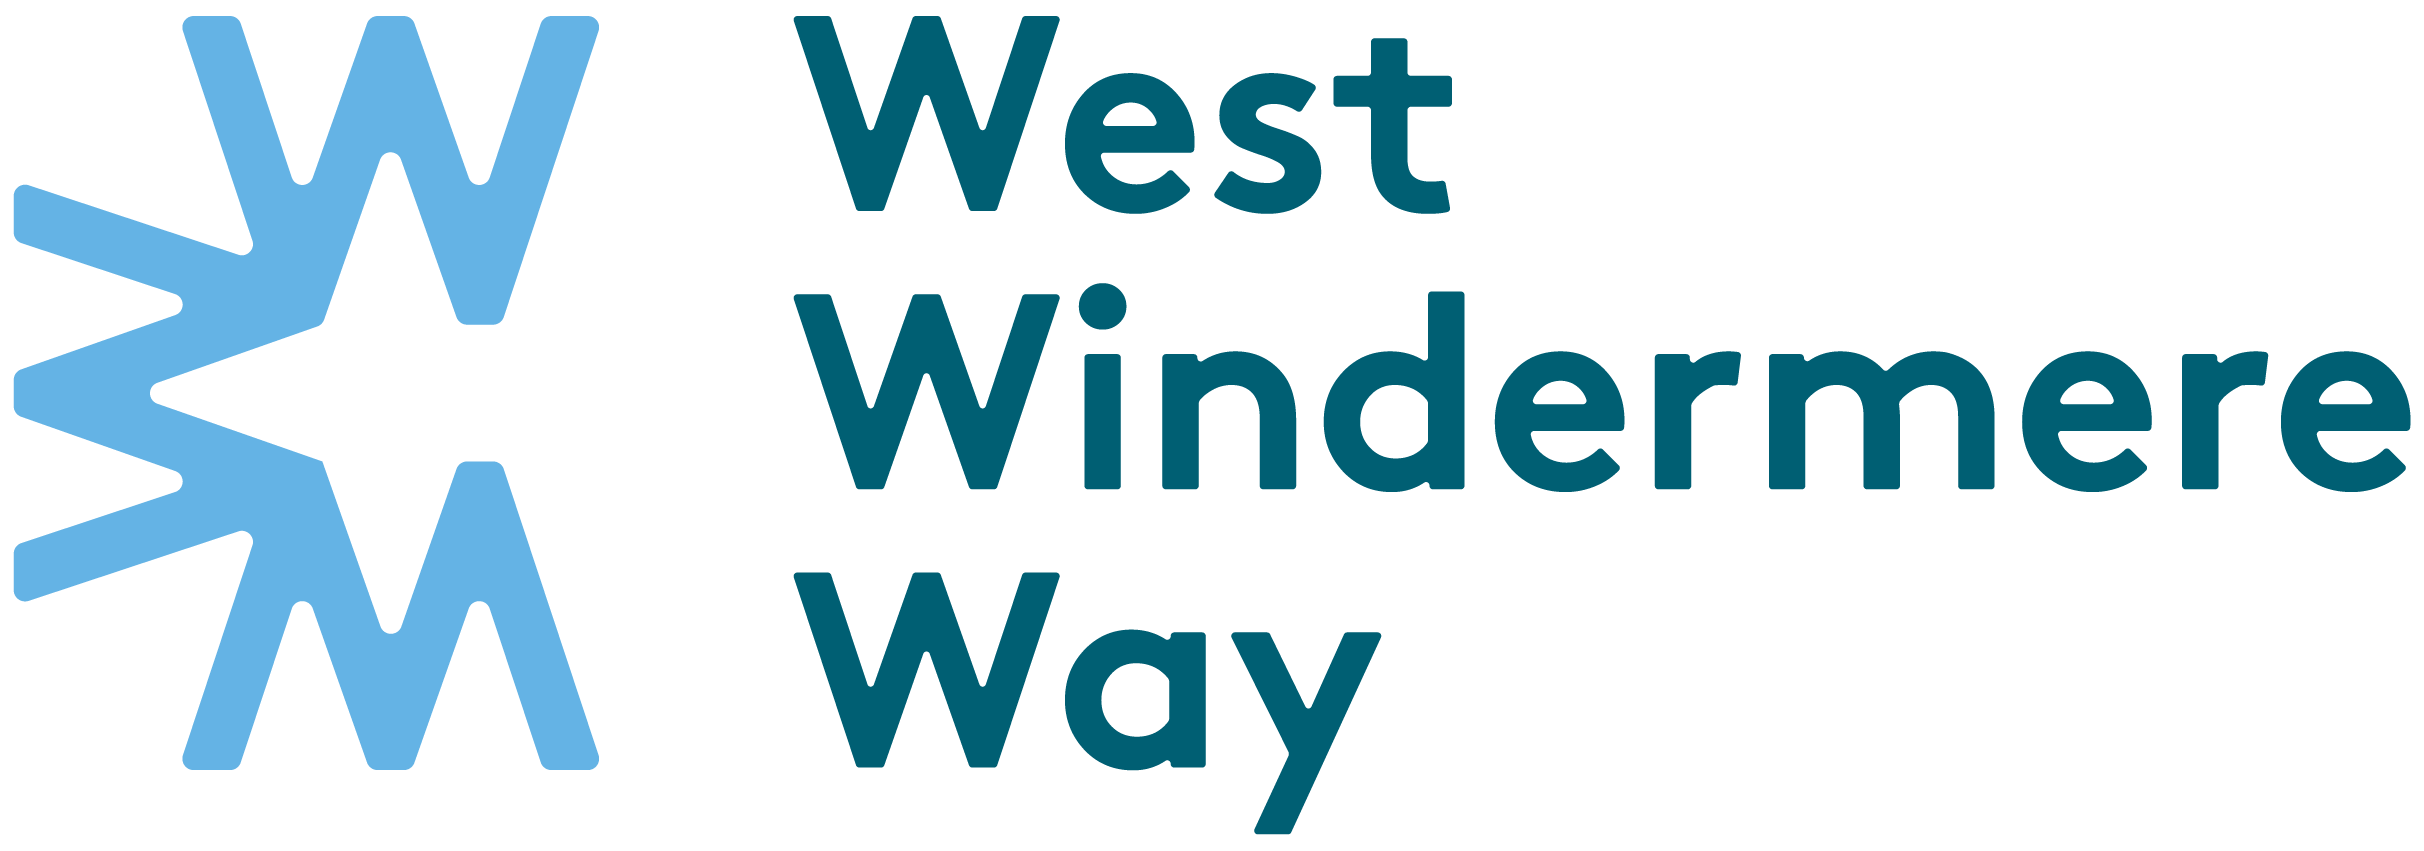 West Windermere Way Logo